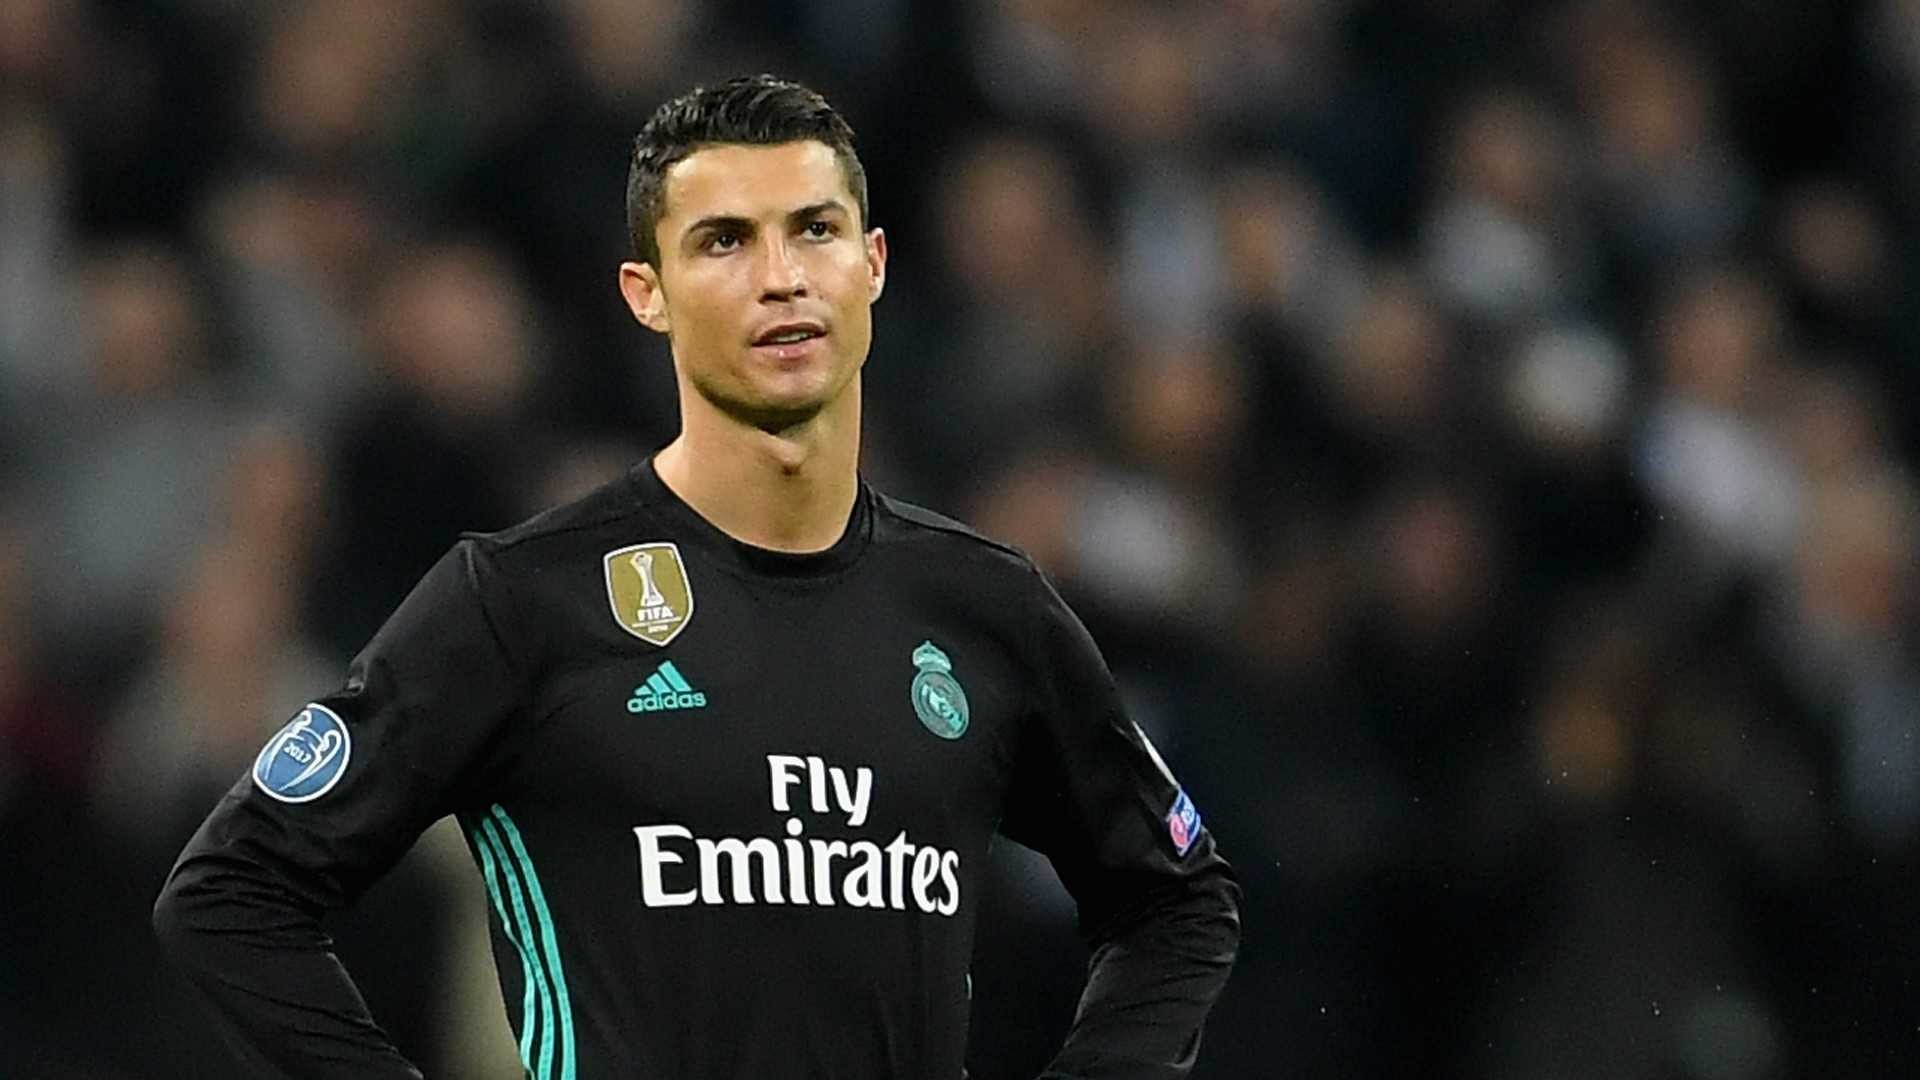 Ronaldo Wallpaper Full HD 1080p, Black T Shirt, Image, Hd, Hq, Full Ronaldo Full HD Image 2018